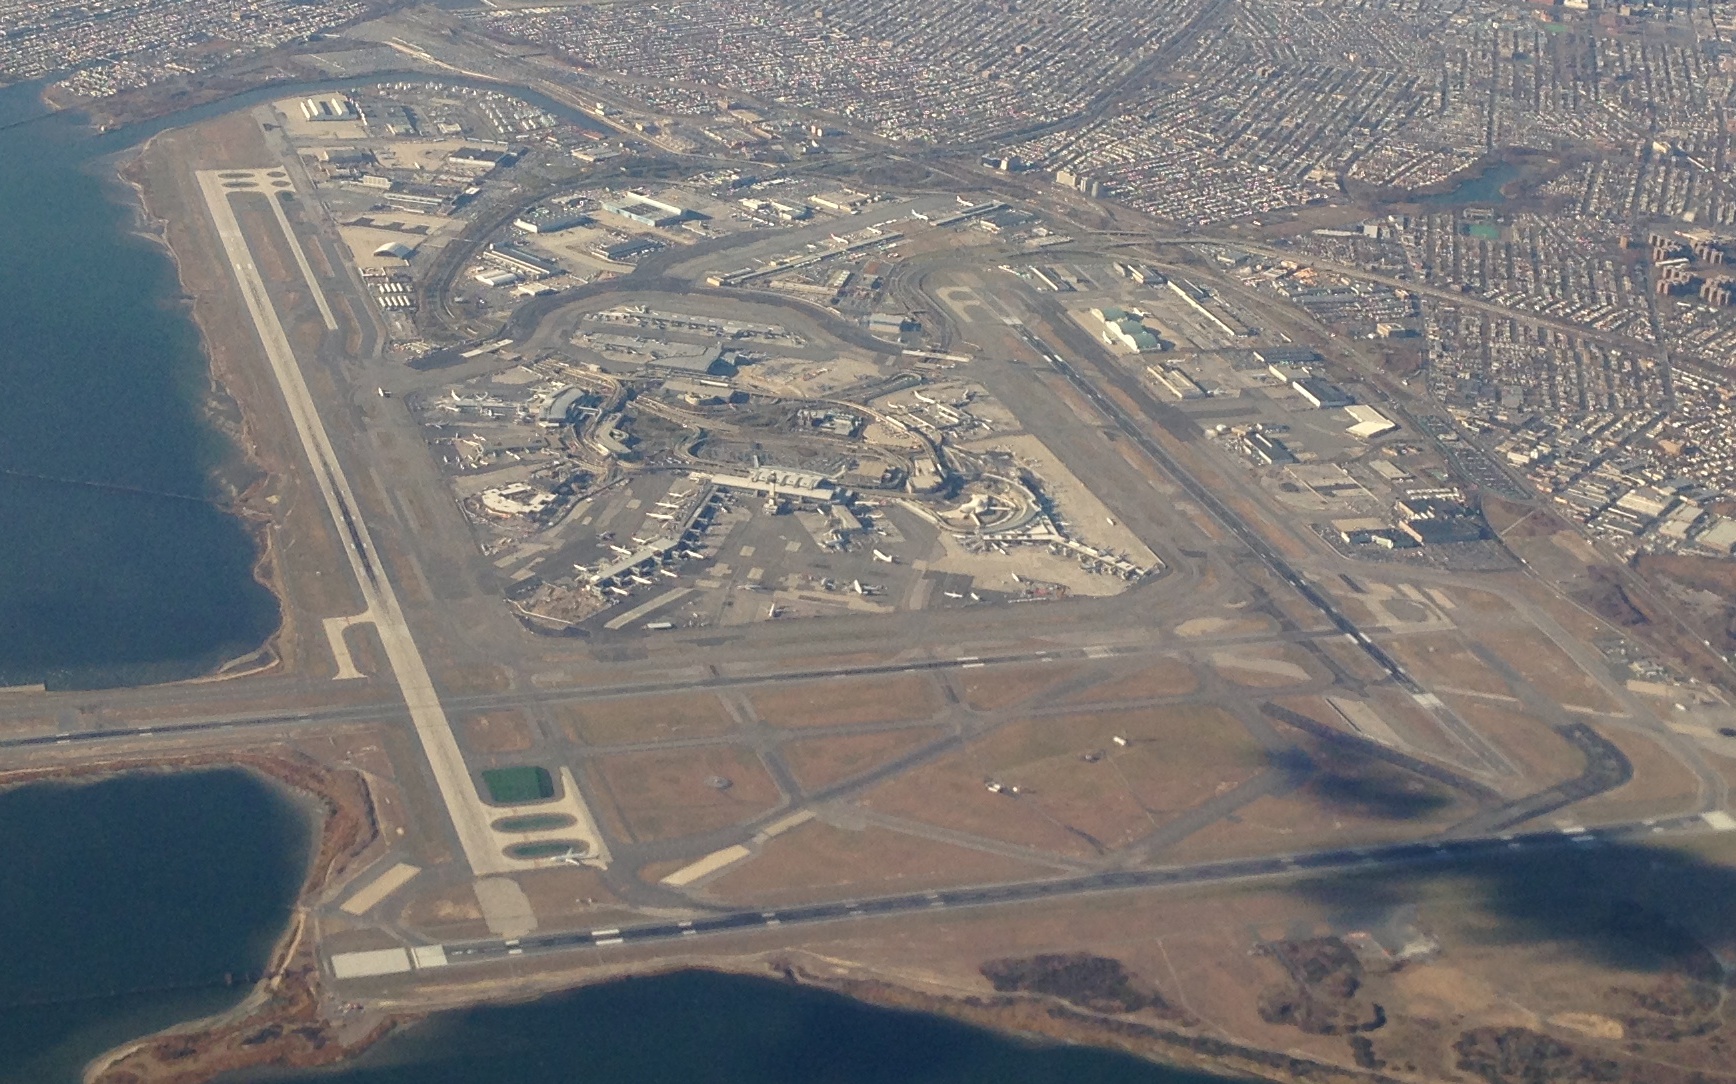 JFK_aerial photo_2013_havayolu 101